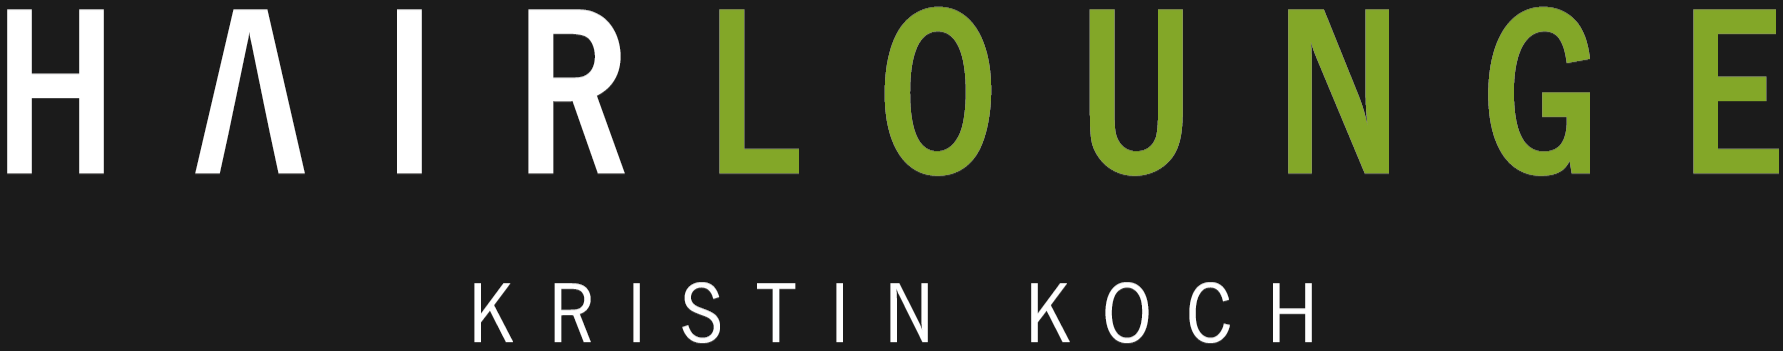 Kristin Koch HAIRLOUNGE - Logo